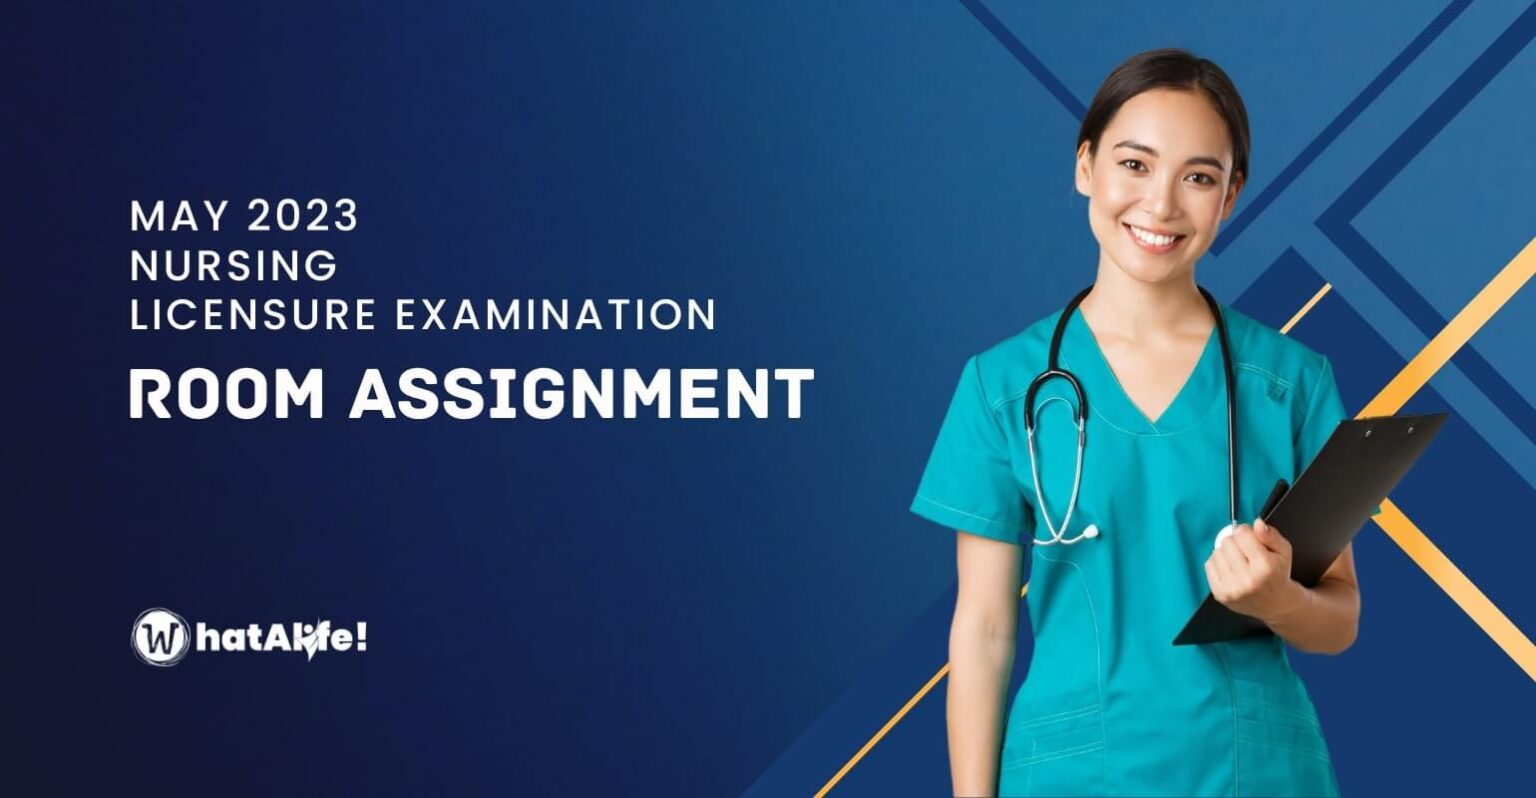 room assignment nursing may 2023